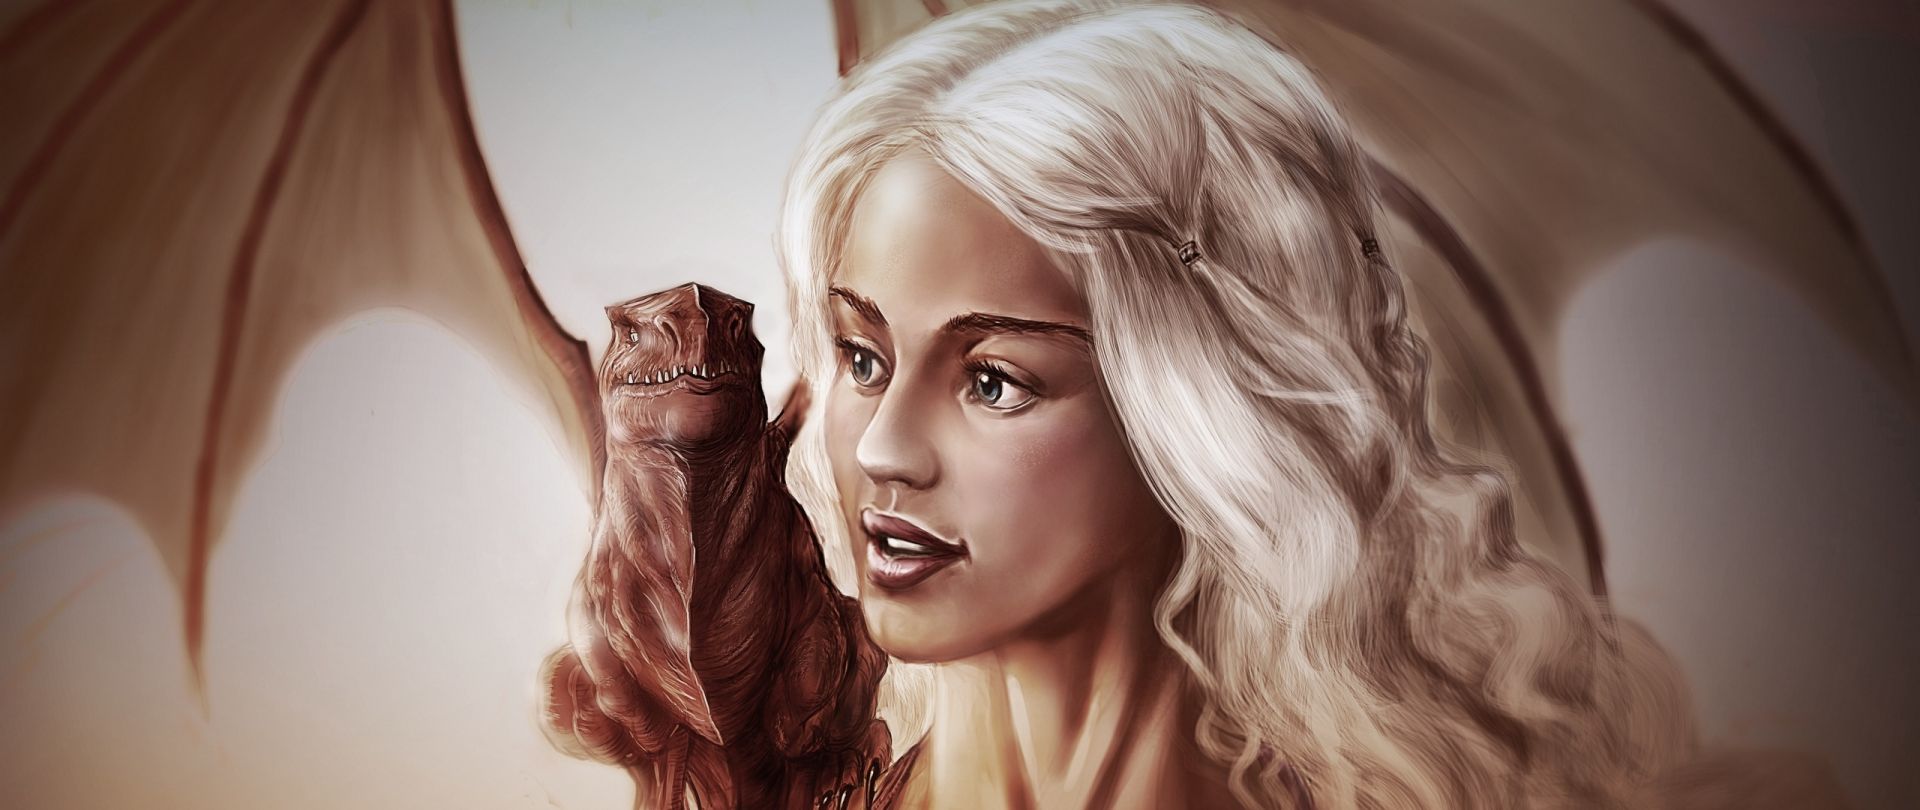 Game of Thrones Daenerys Targaryen fan art